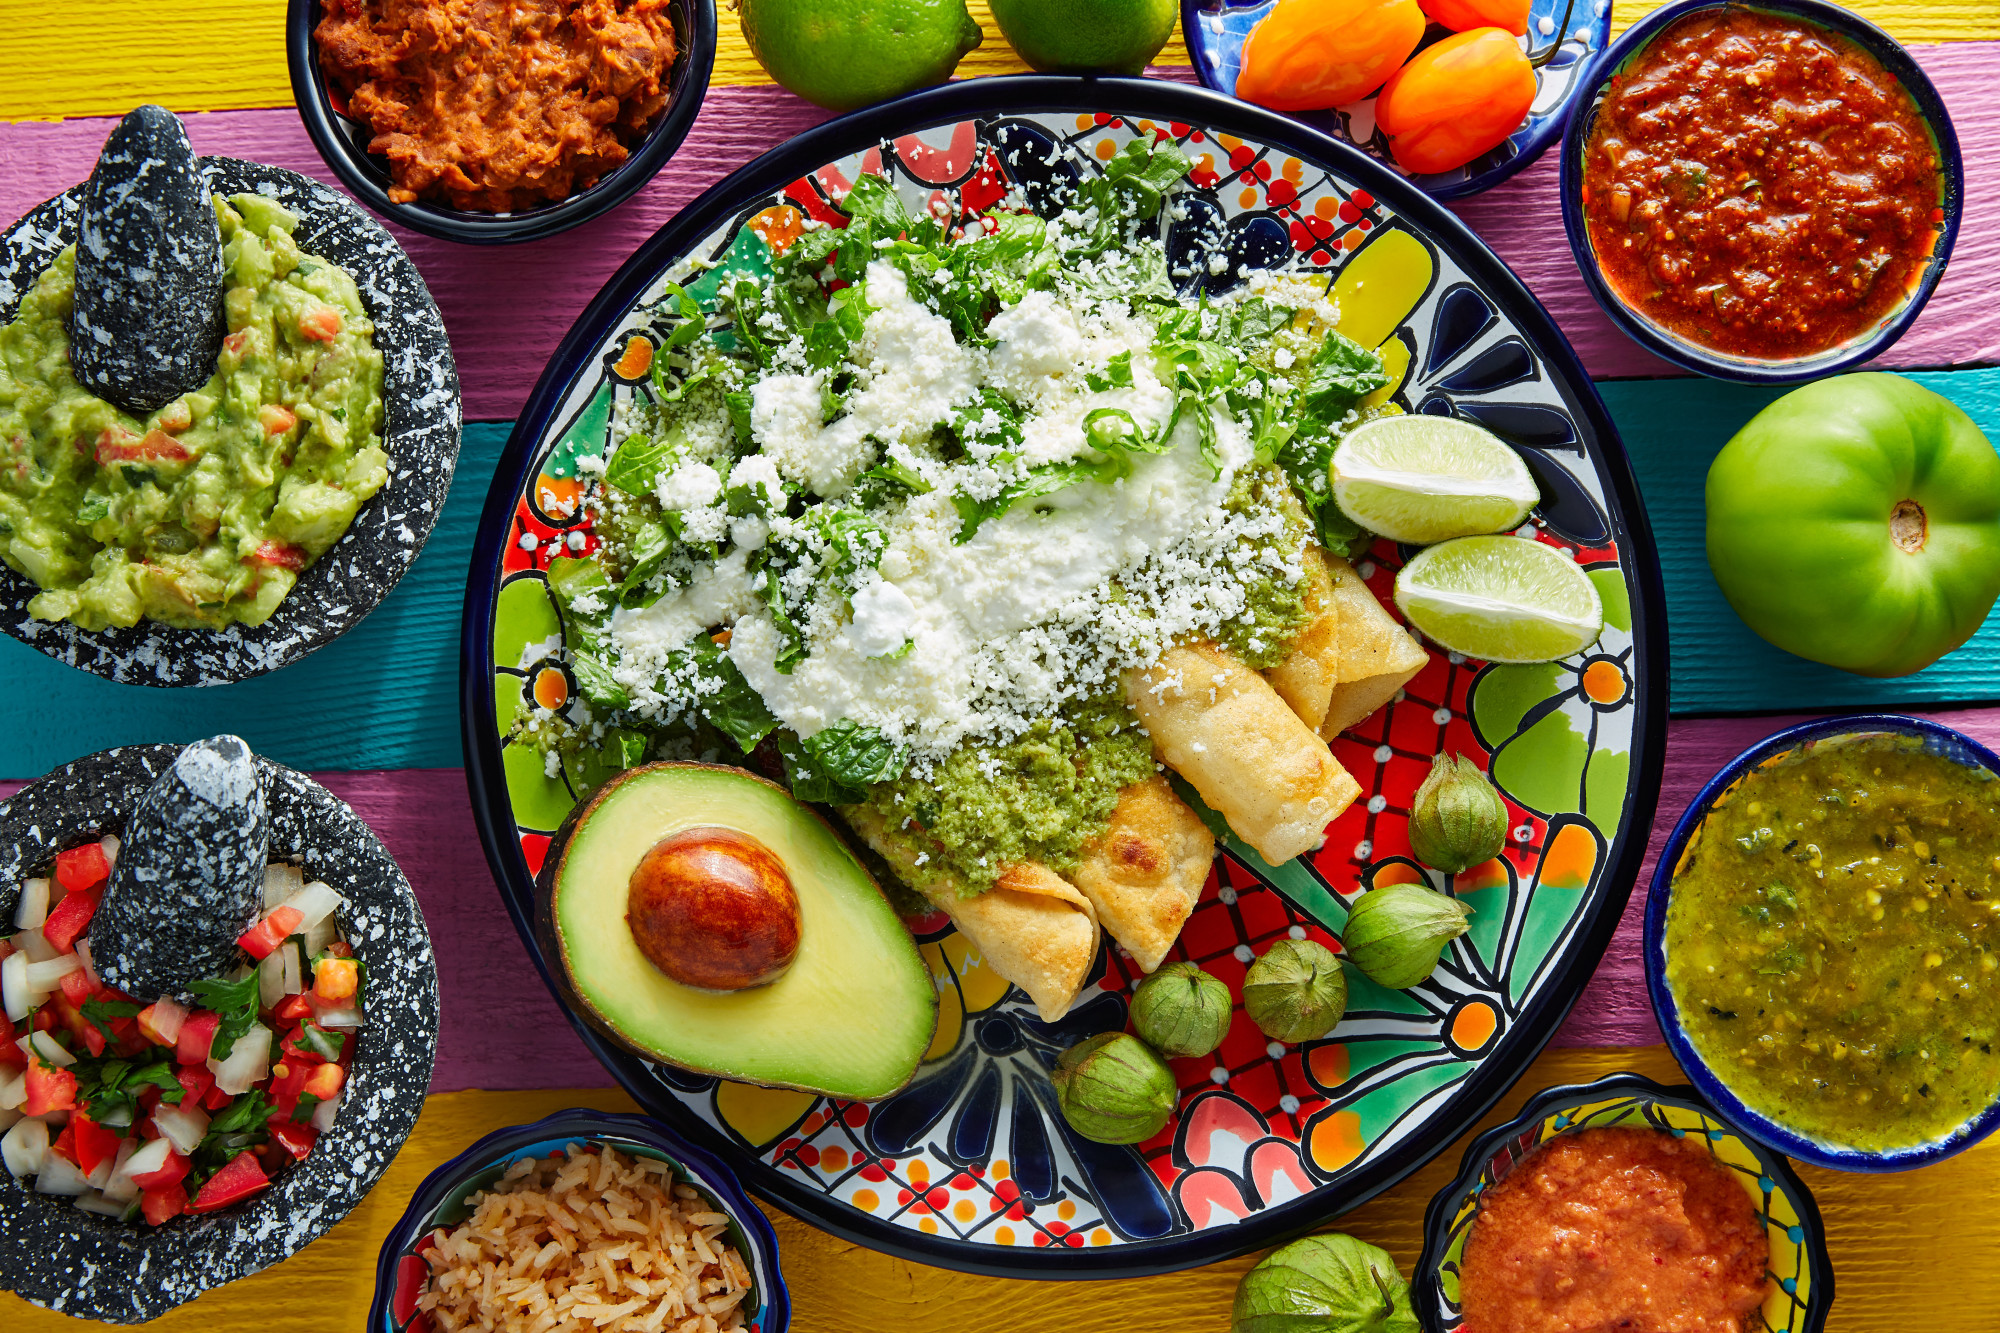 food presentation in mexico